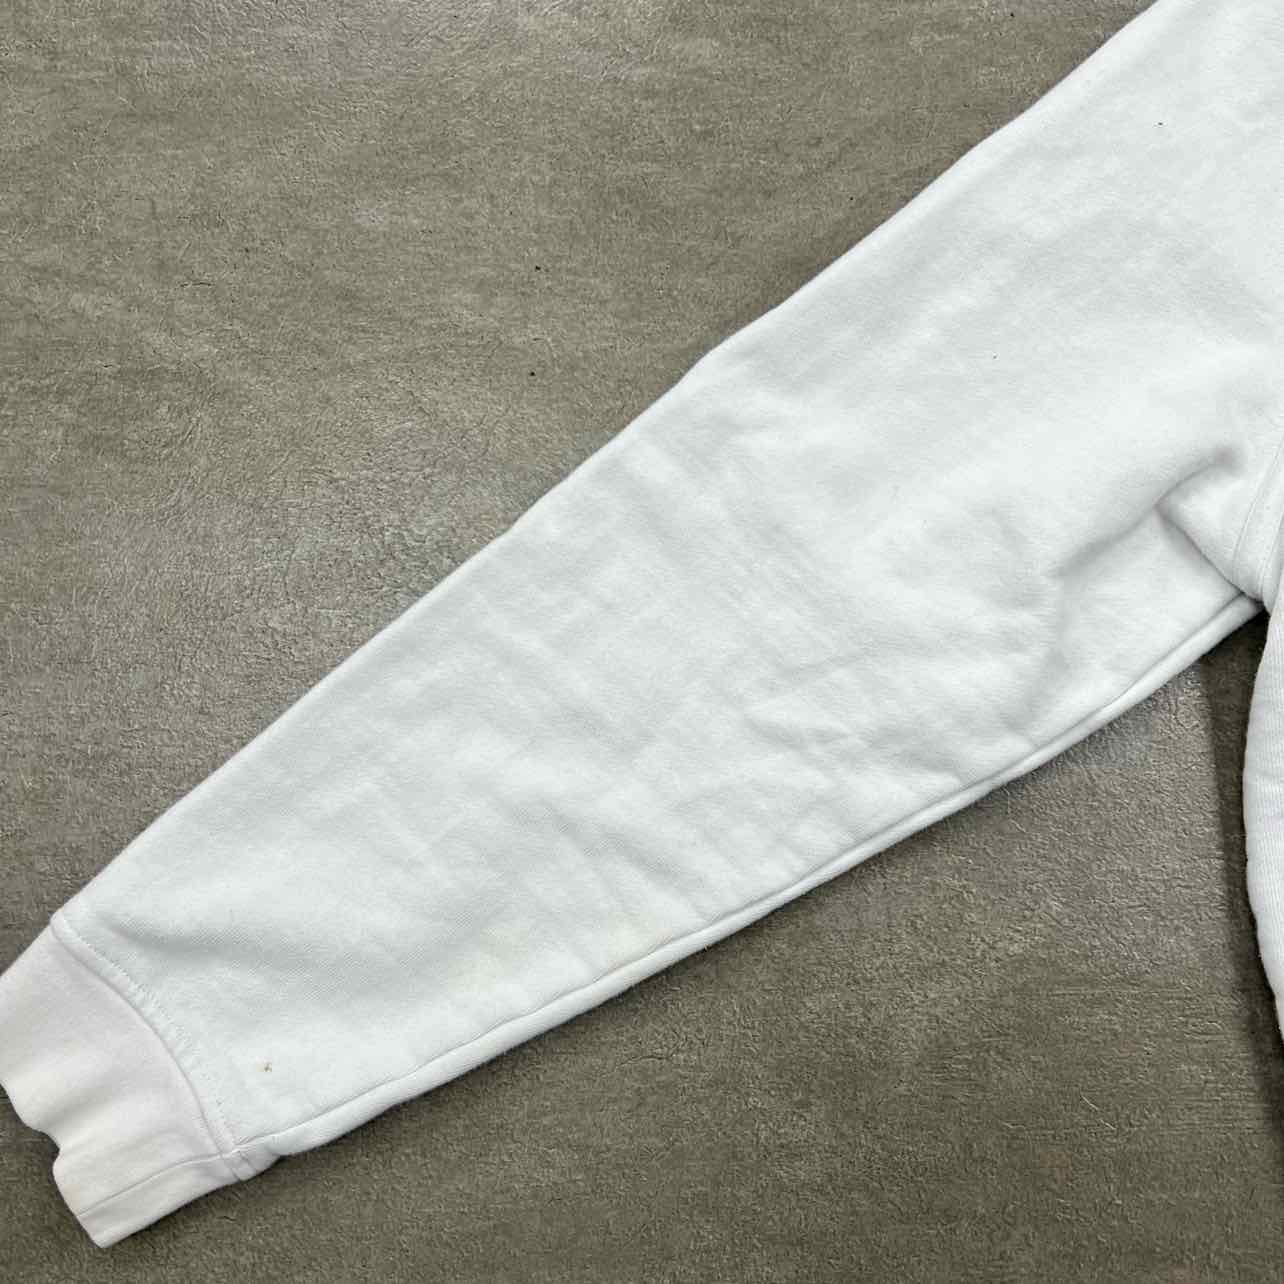 Kith Crewneck Sweater "BOYZ N THE HOOD" White Used Size L